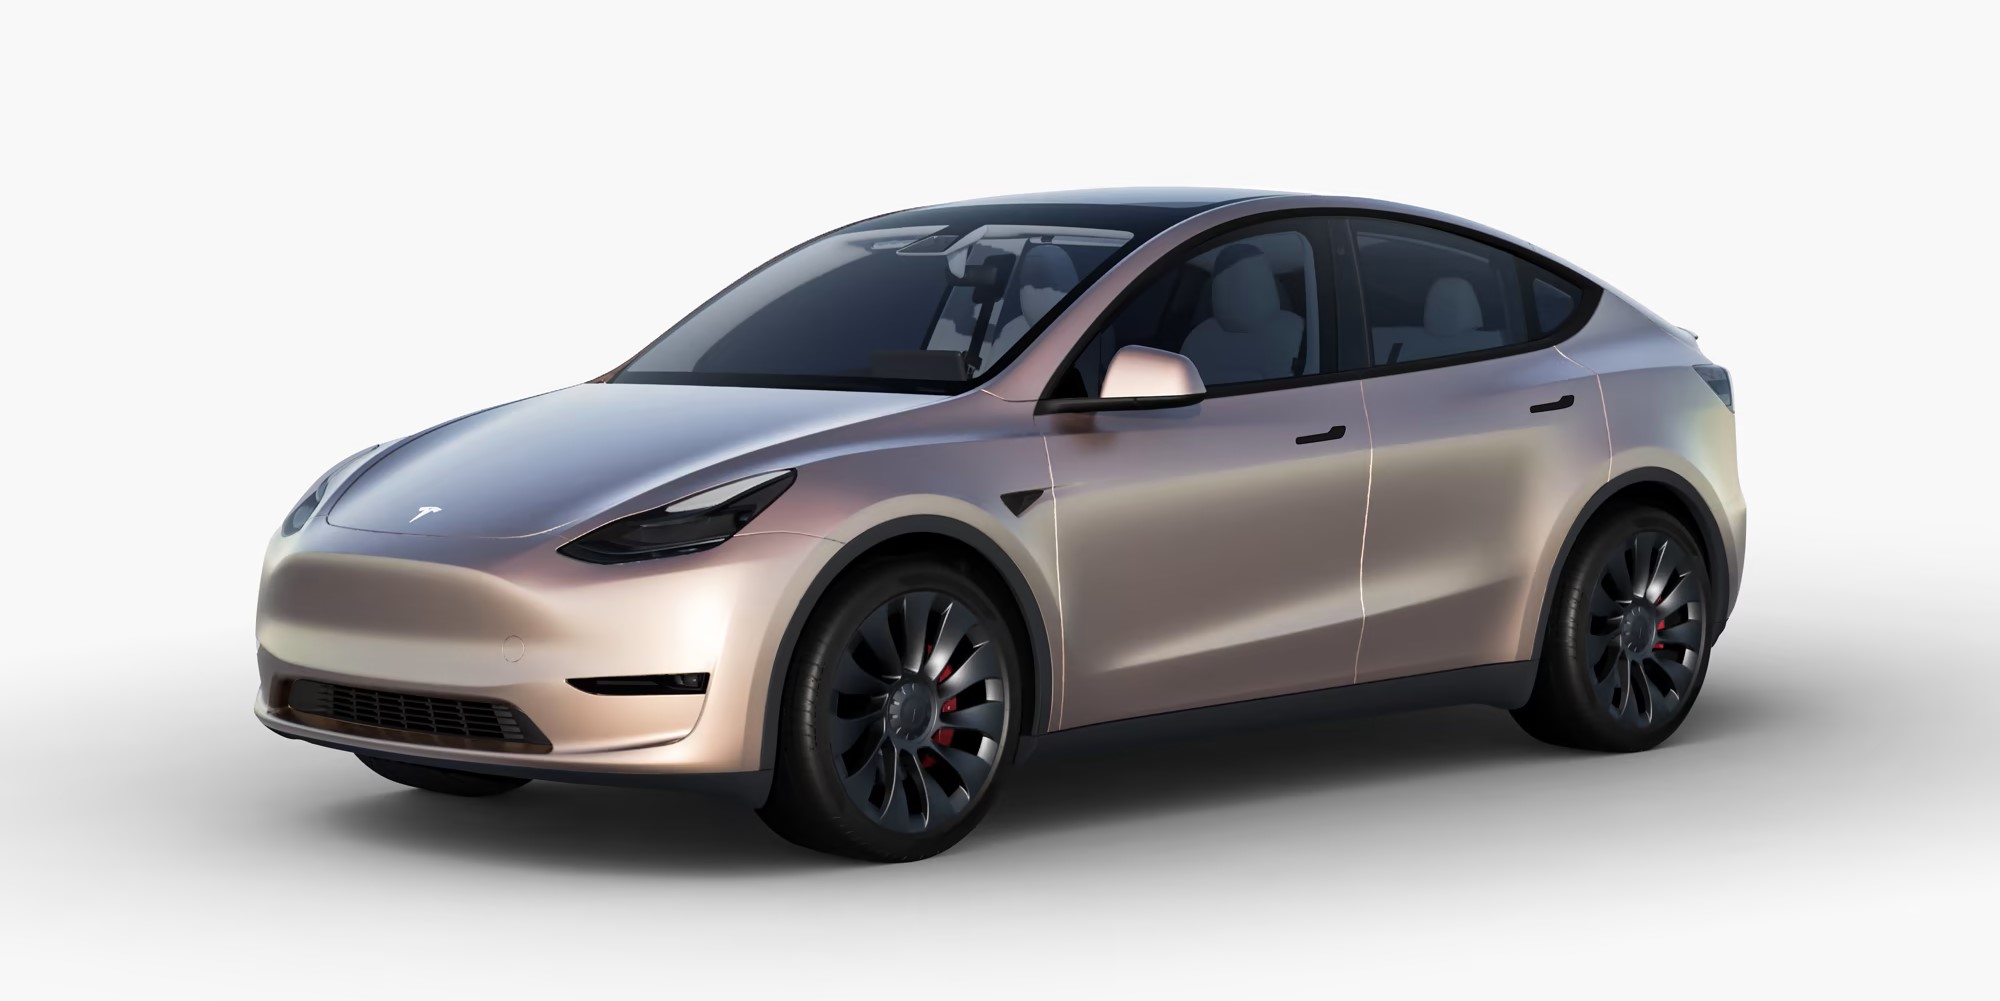 2019 Tesla Model 3 Review (CleanTechnica Exclusive)